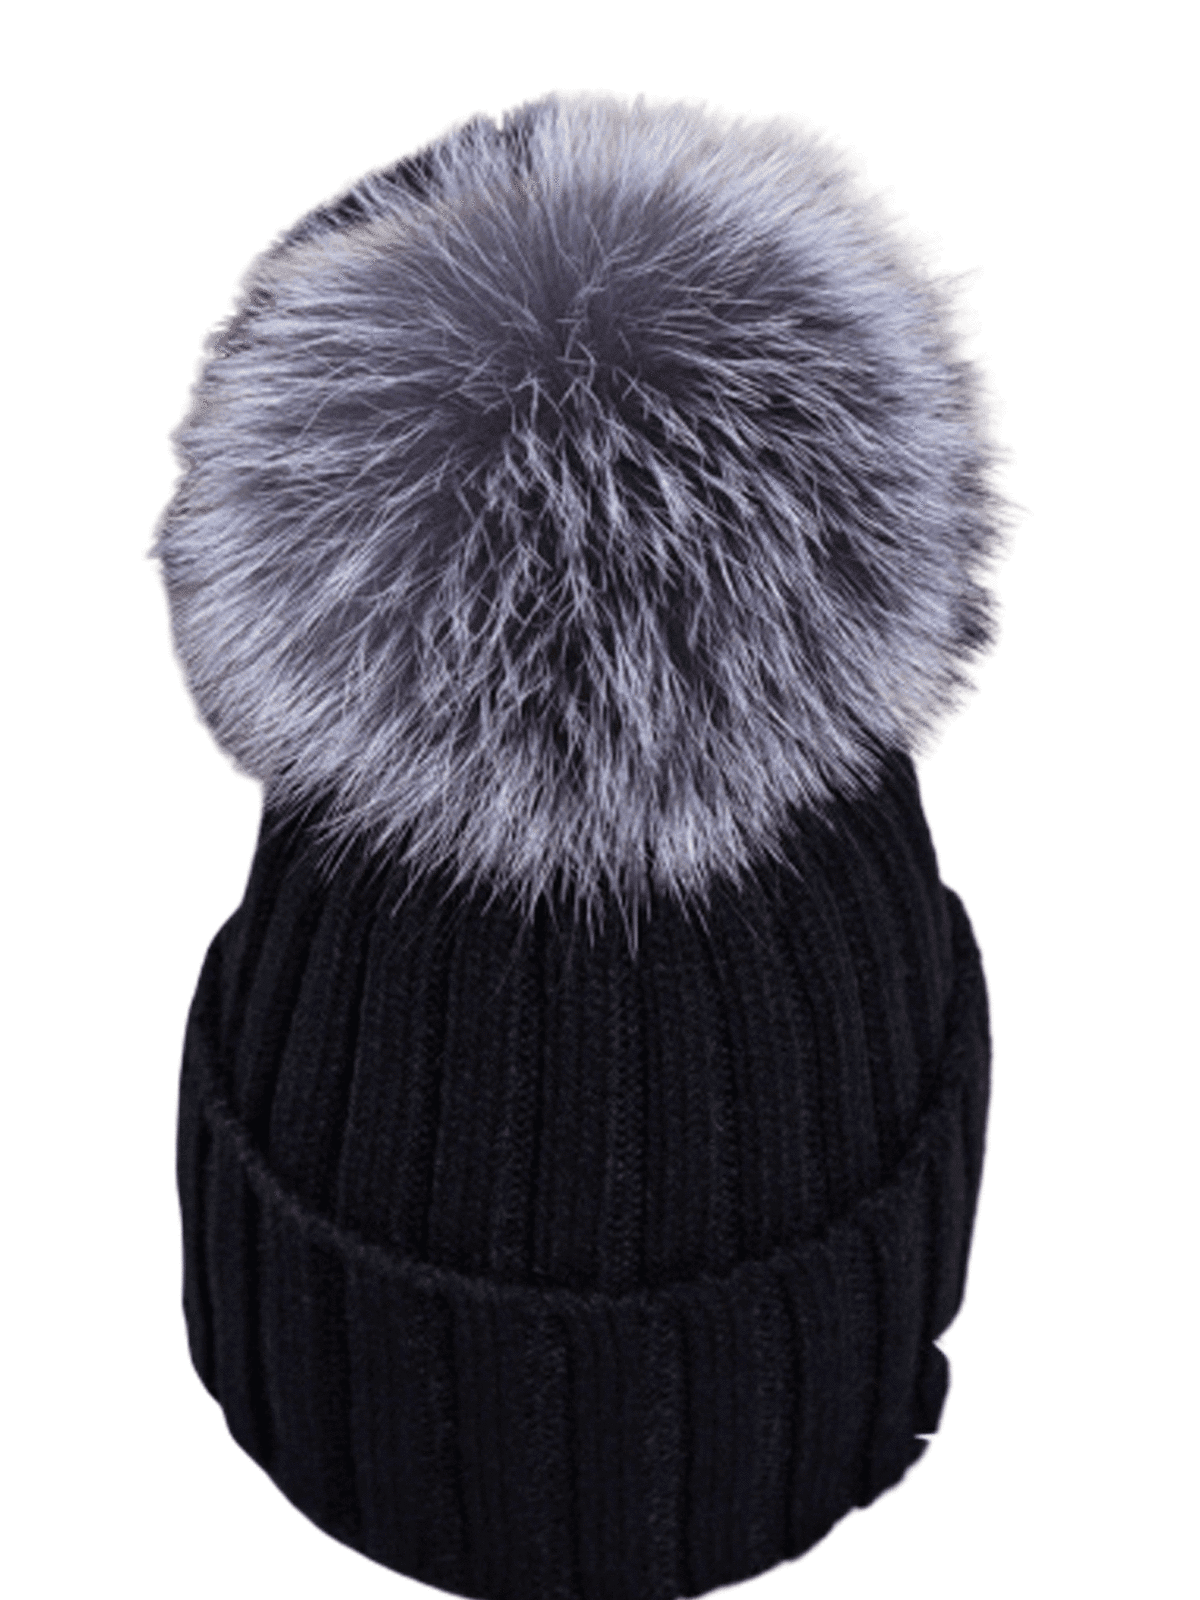 baby hat fur pompom beanie Bobble hat pompom hat fur pompom hat knit hat toque knitted hat kids hat handmade hat